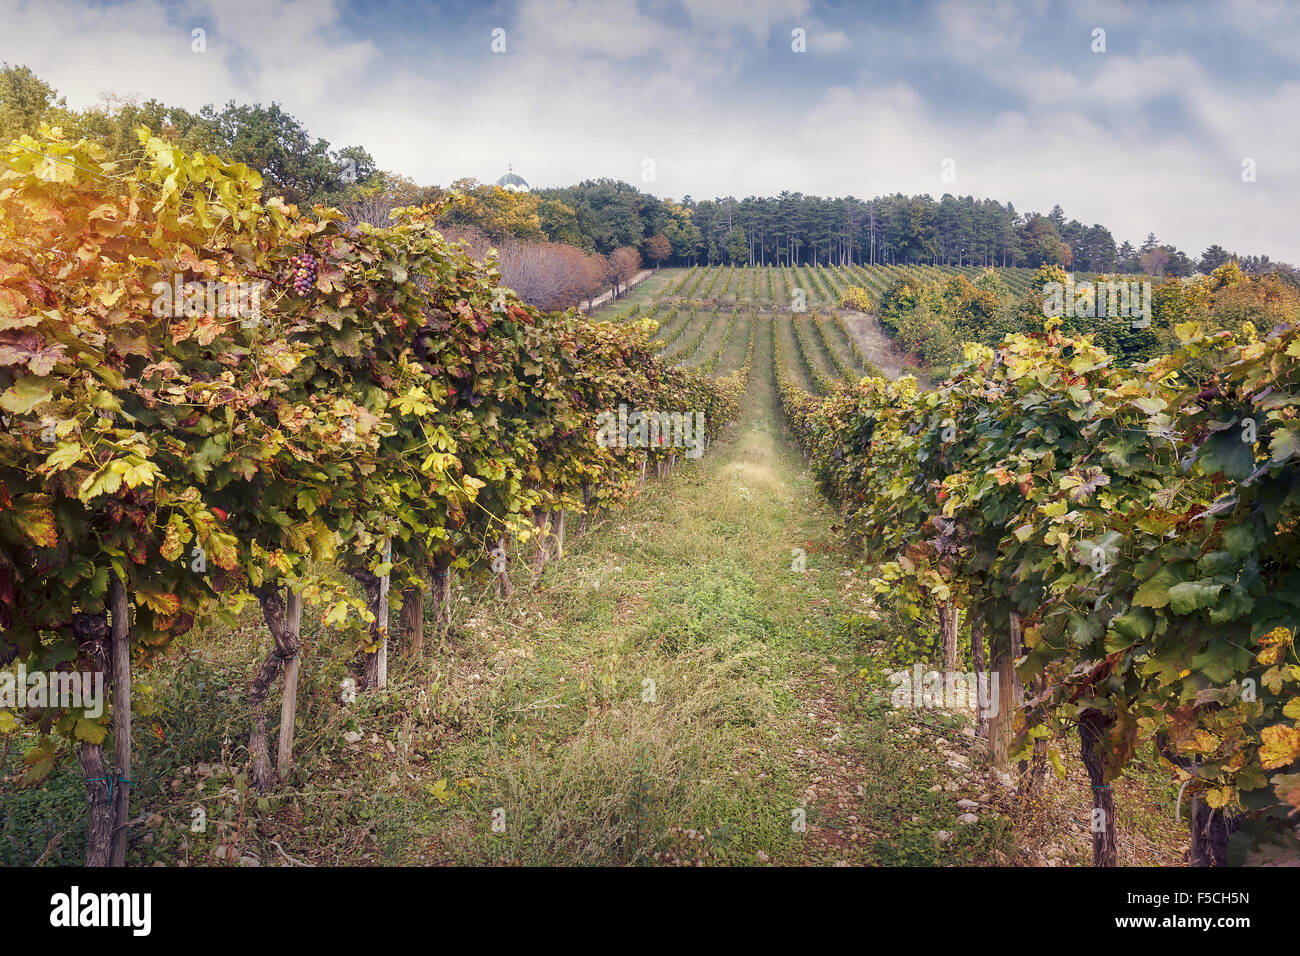 Vineyard in Serbia Stock Photo